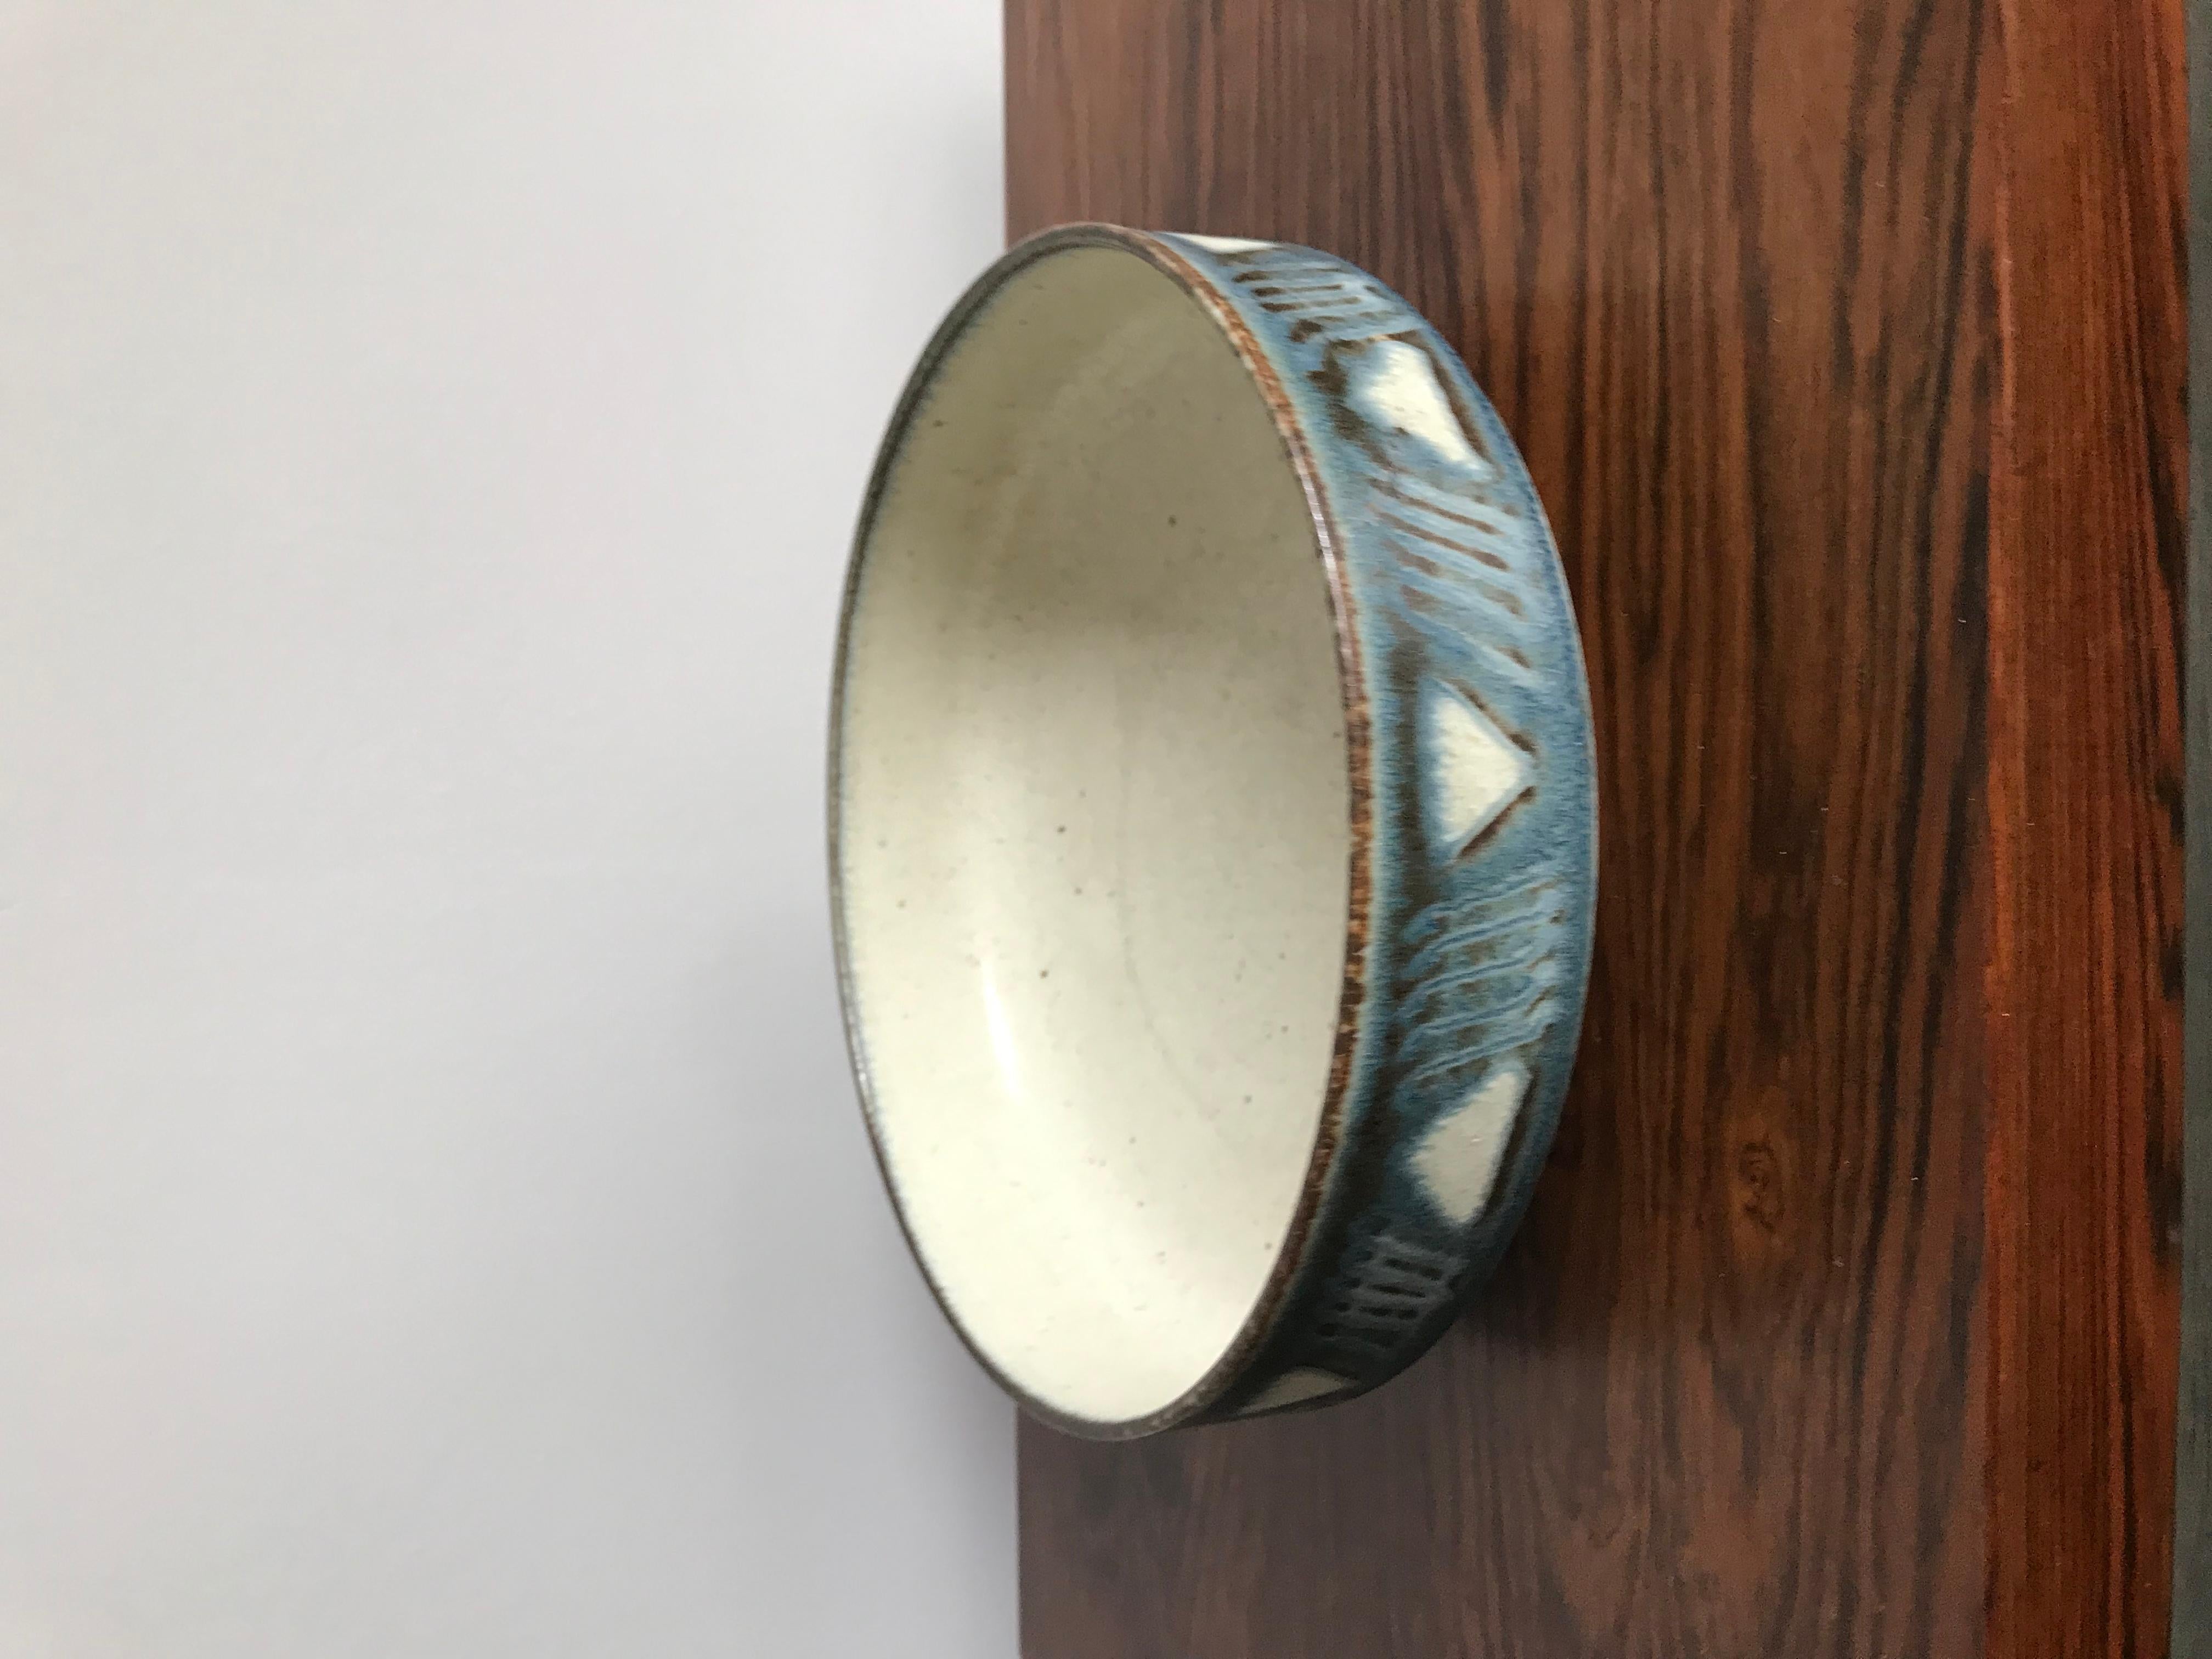 Scandinavian Mid-Century Modern design ceramic bowl or centerpiece designed by Saxbo,
marked below base, Denmark, circa 1950s.